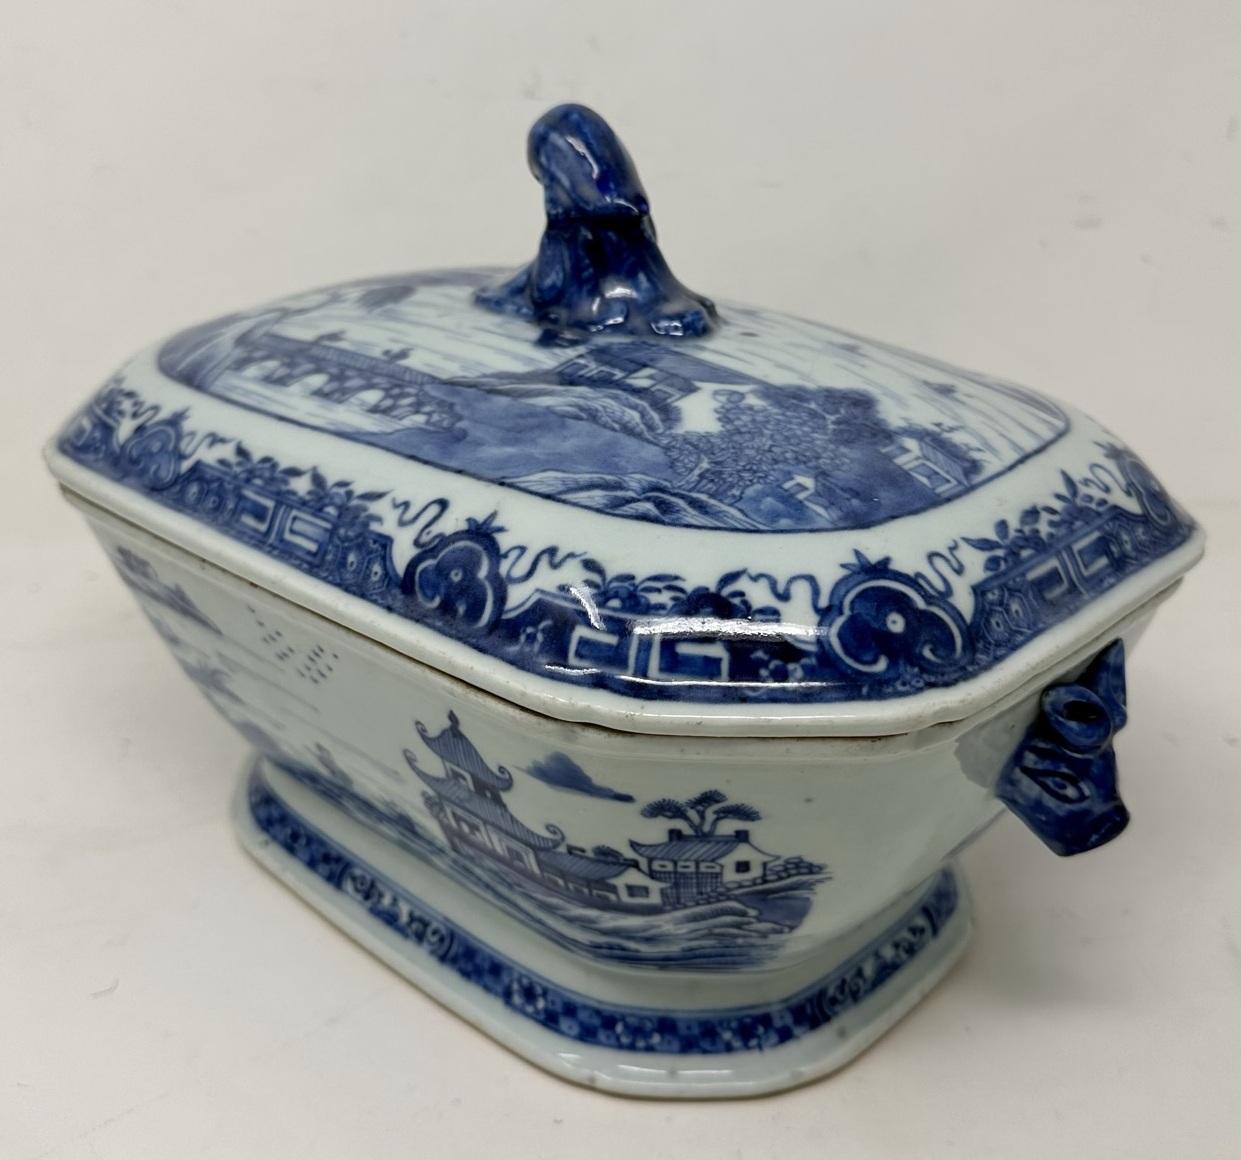 Ceramic Antique Chinese Export Porcelain Blue White Chien Lung Soup Tureen Centerpiece